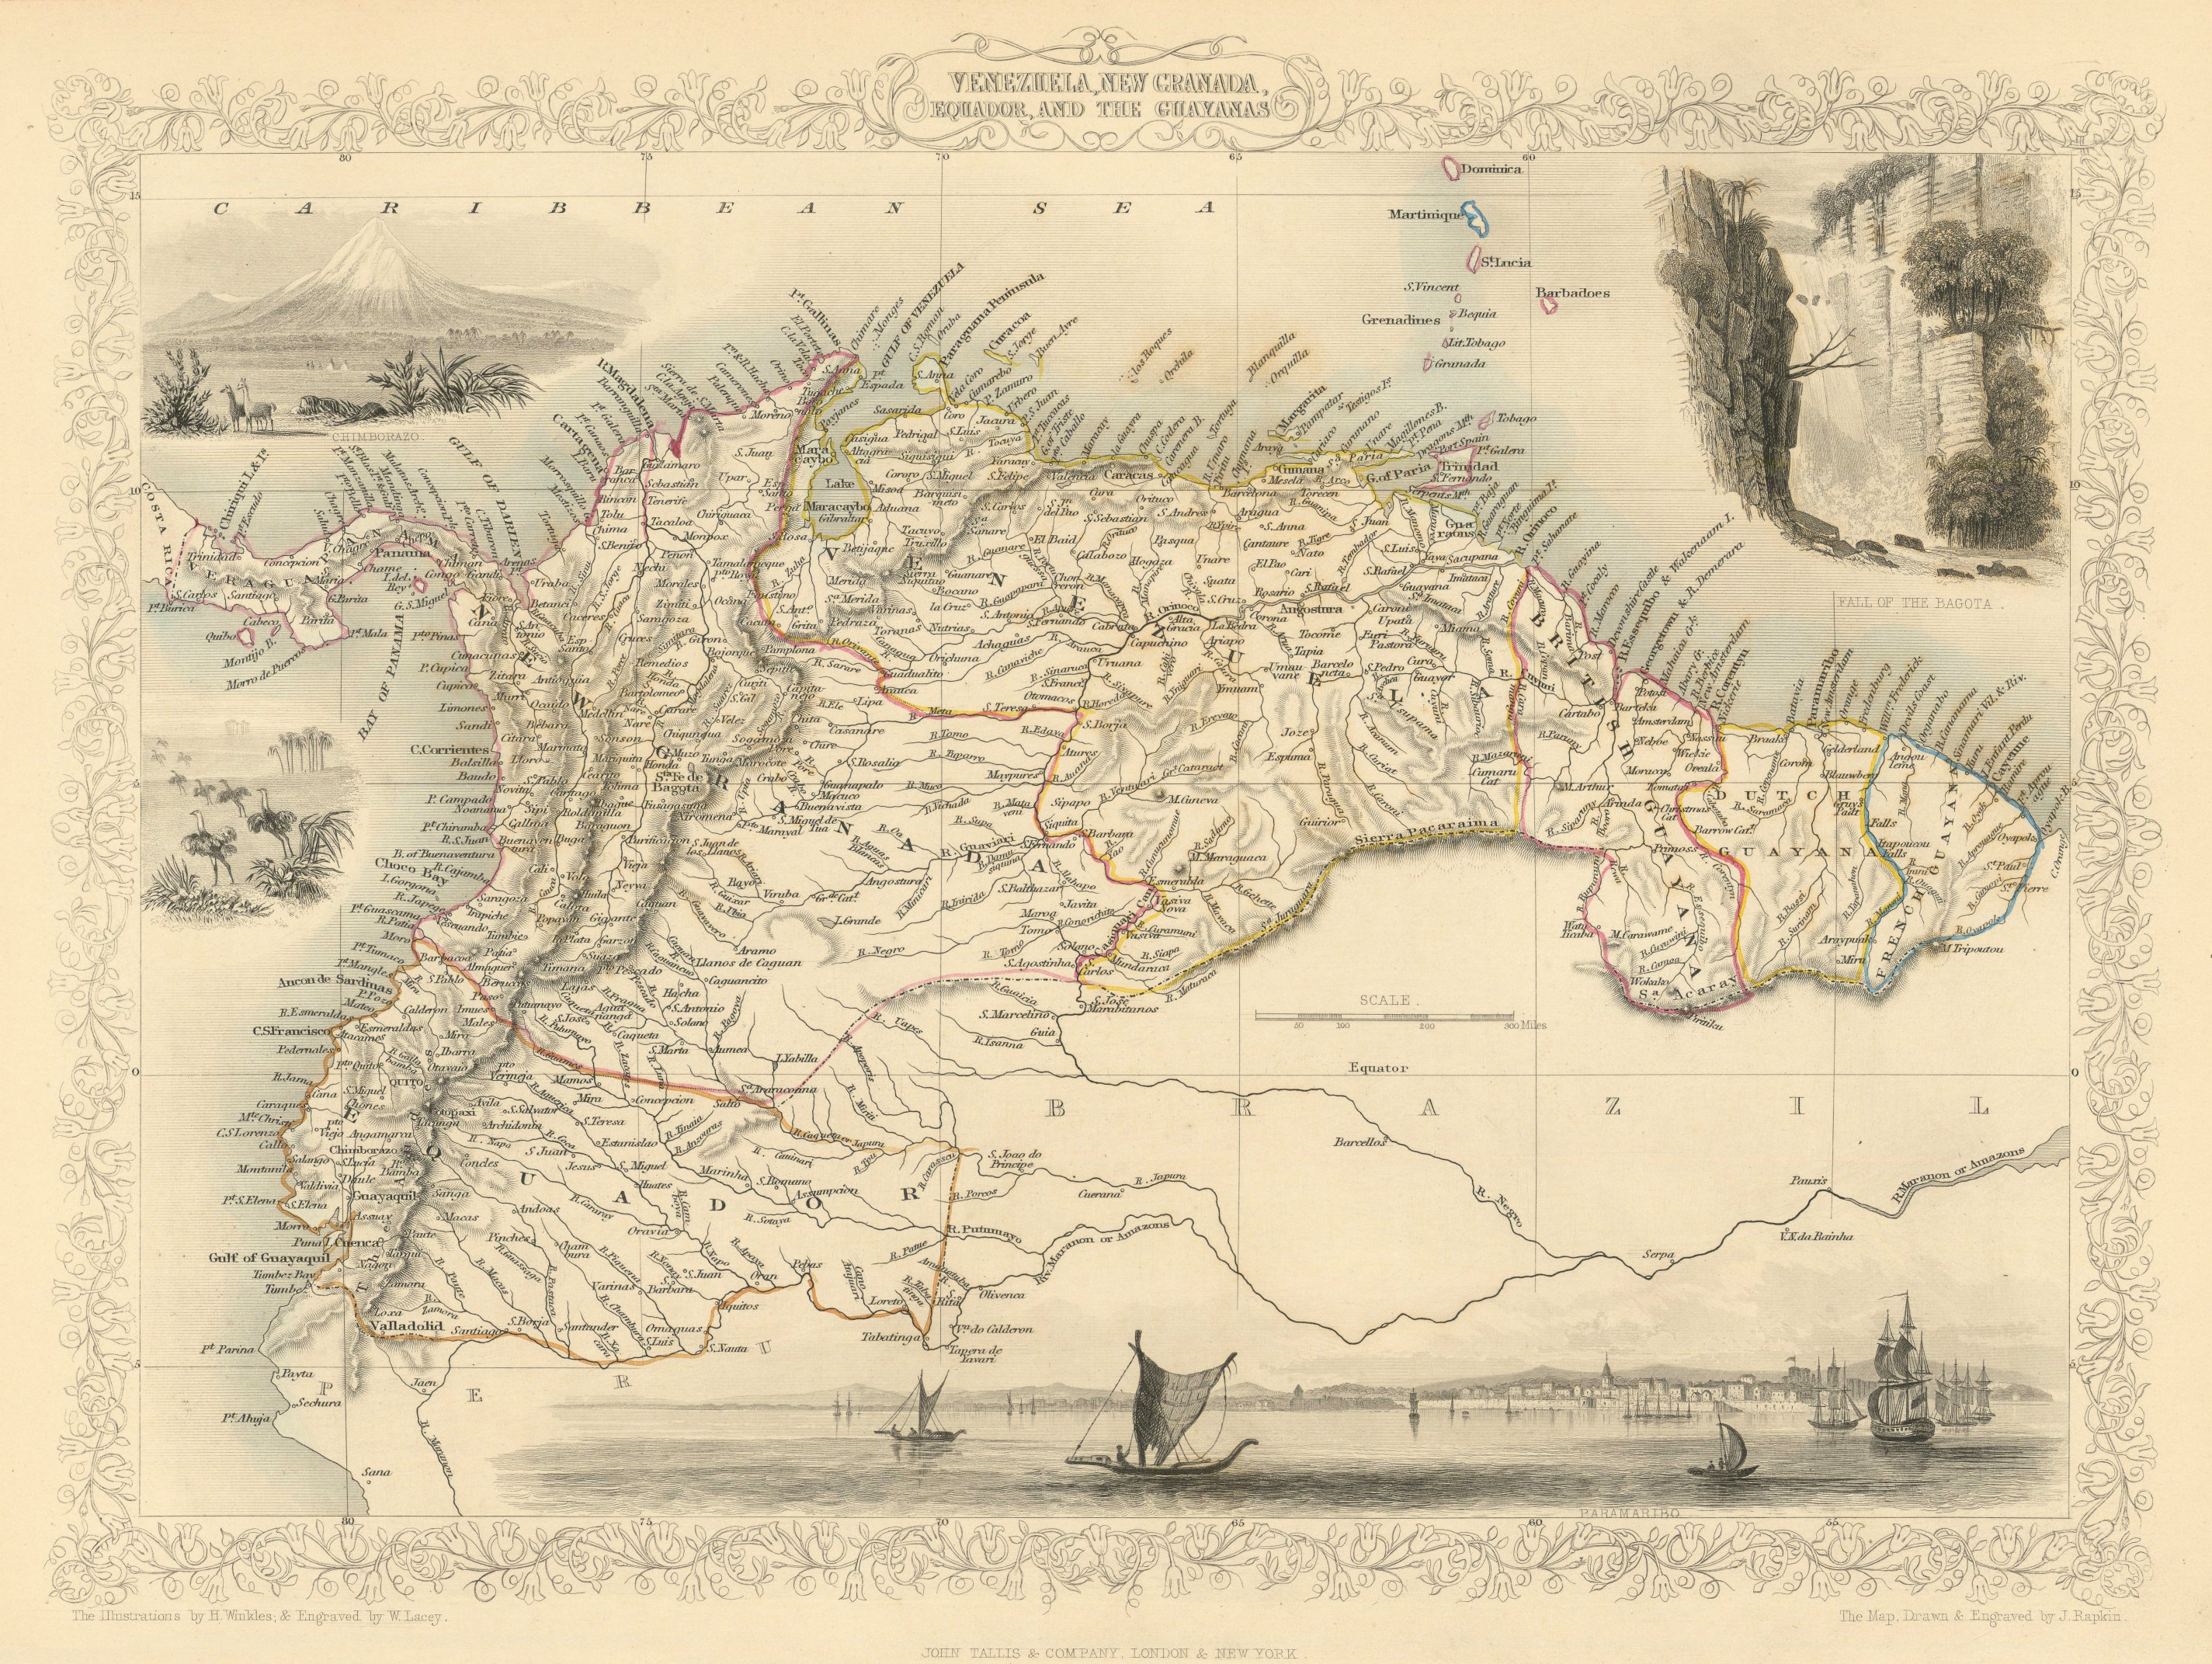 Associate Product VENEZUELA, NEW GRANADA, EQUADOR & THE GUYANAS'. Ecuador.TALLIS/RAPKIN 1851 map